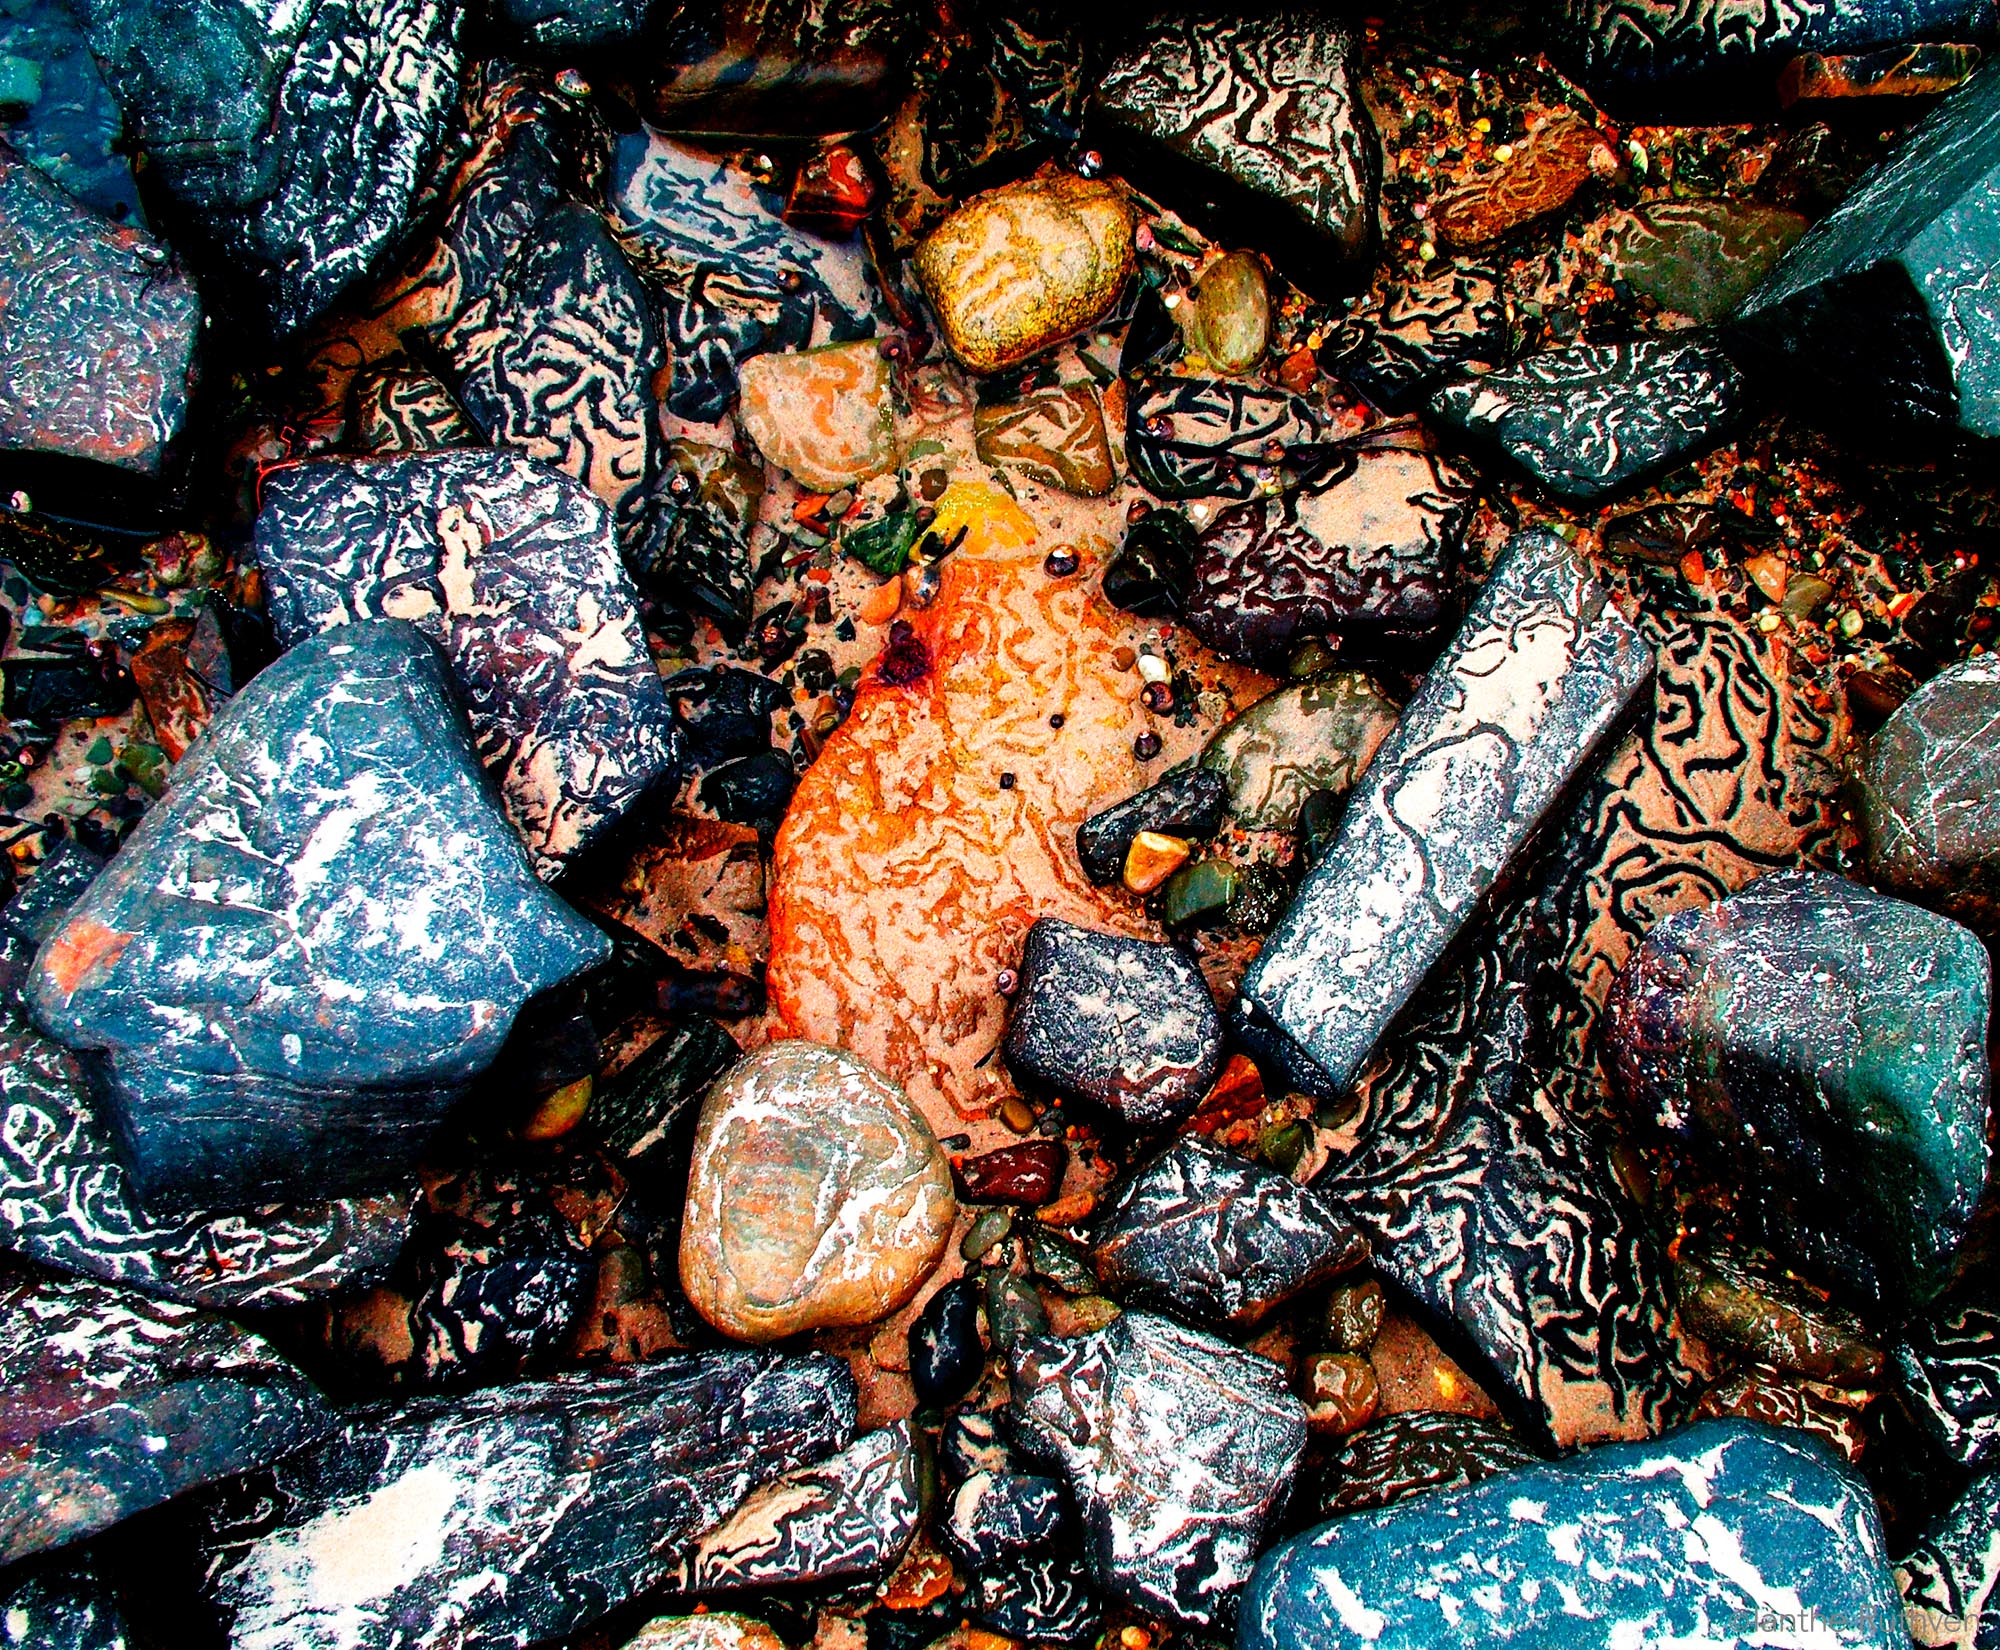 Snail trails on pebbles